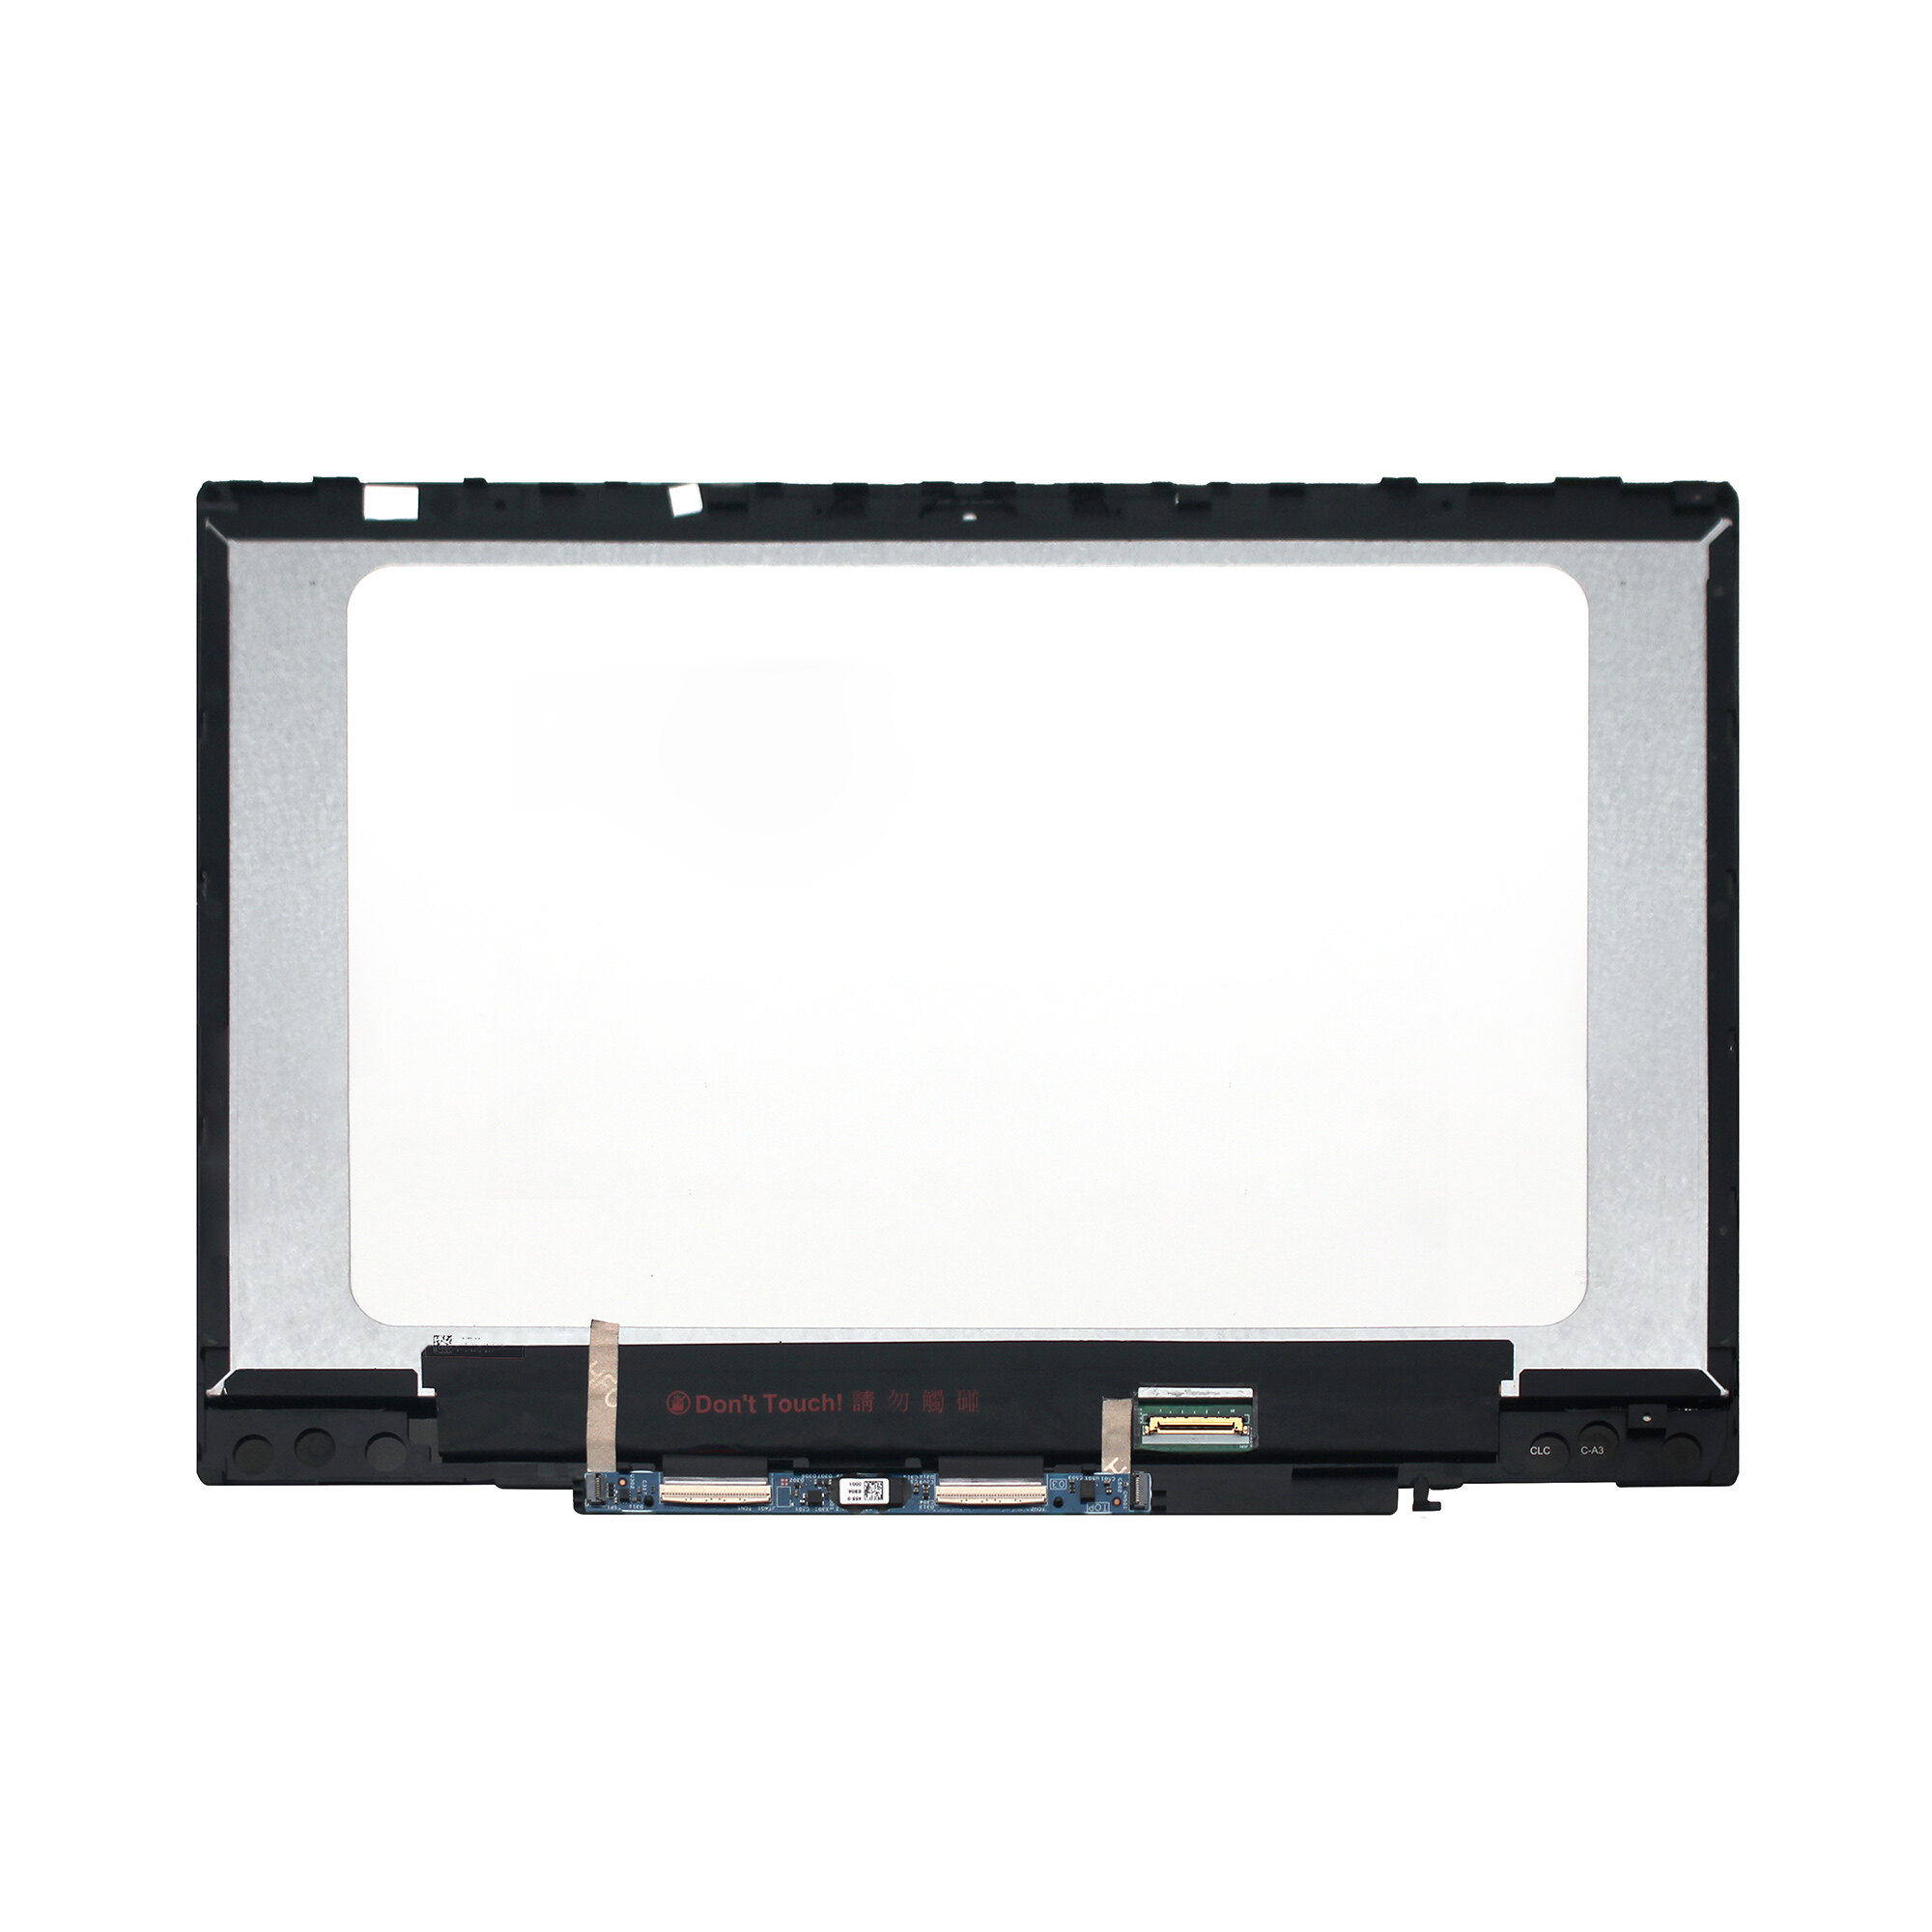 Kreplacement For HP Pavilion 14-cd0012la 14-cd0005la 14-cd0004la 14-cd0010la 14-cd1218la IPS LCD Display Touchscreen Glass Digitizer Assembly